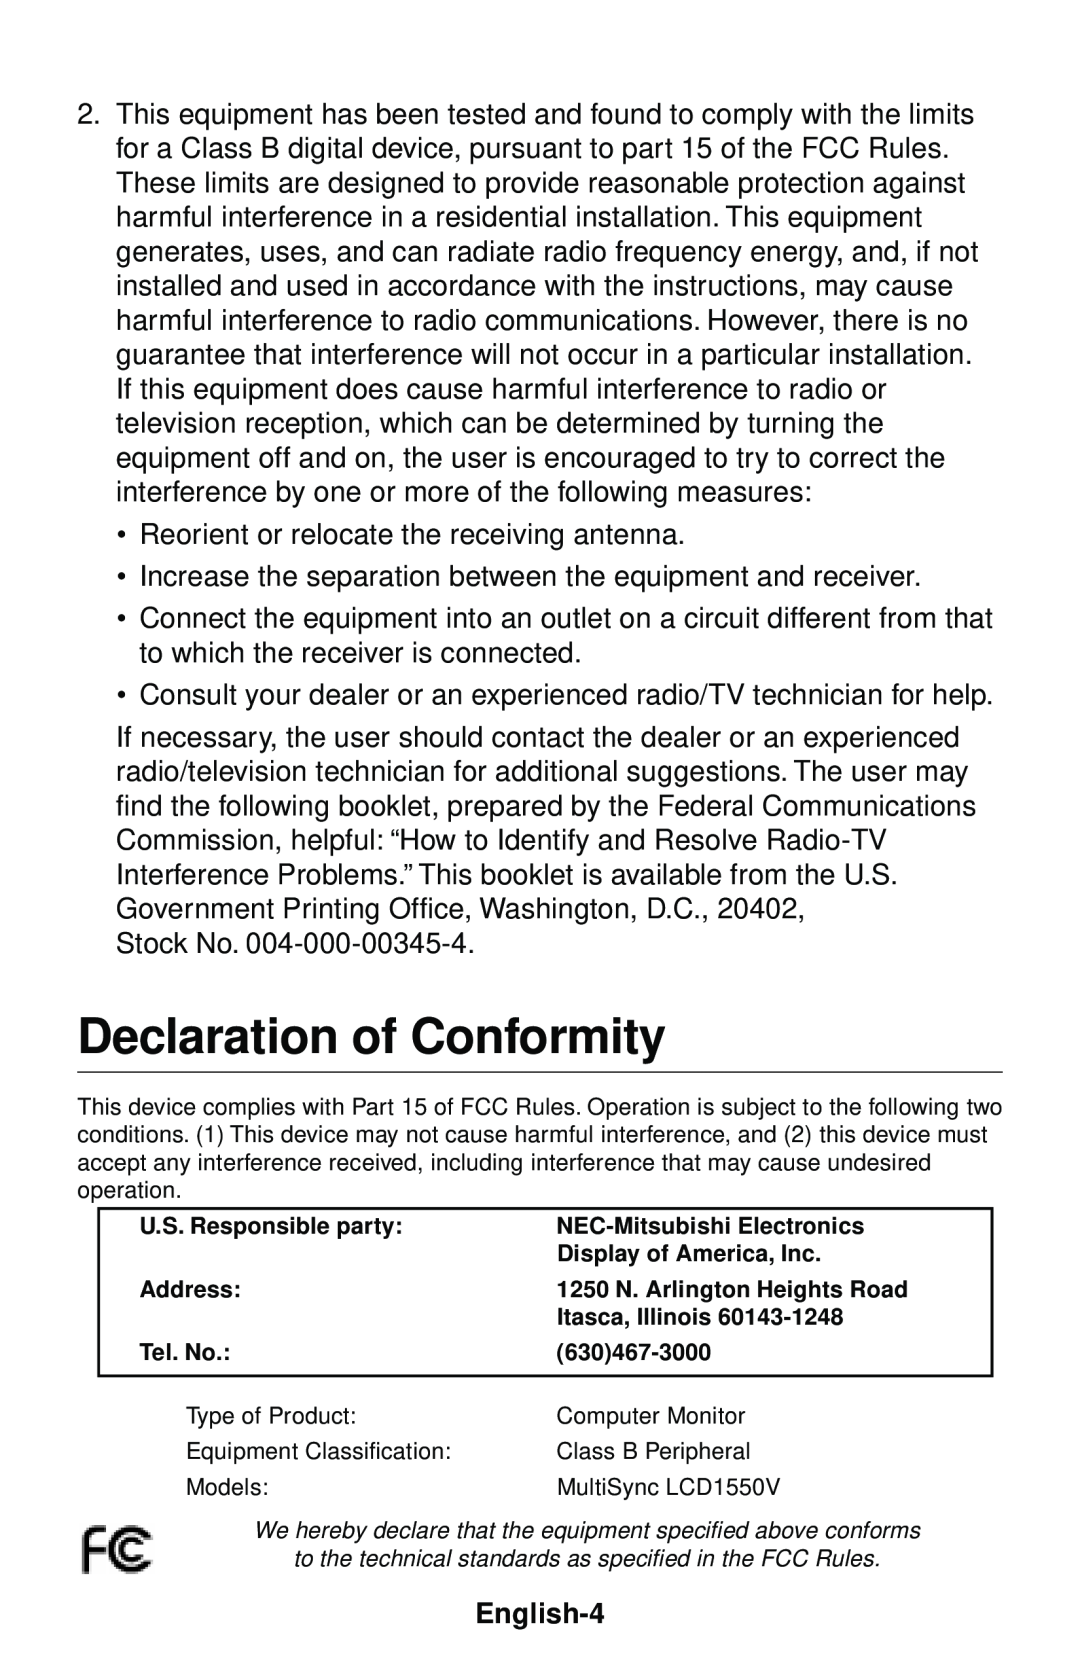 NEC LCD1550V user manual English-4, Declaration of Conformity 